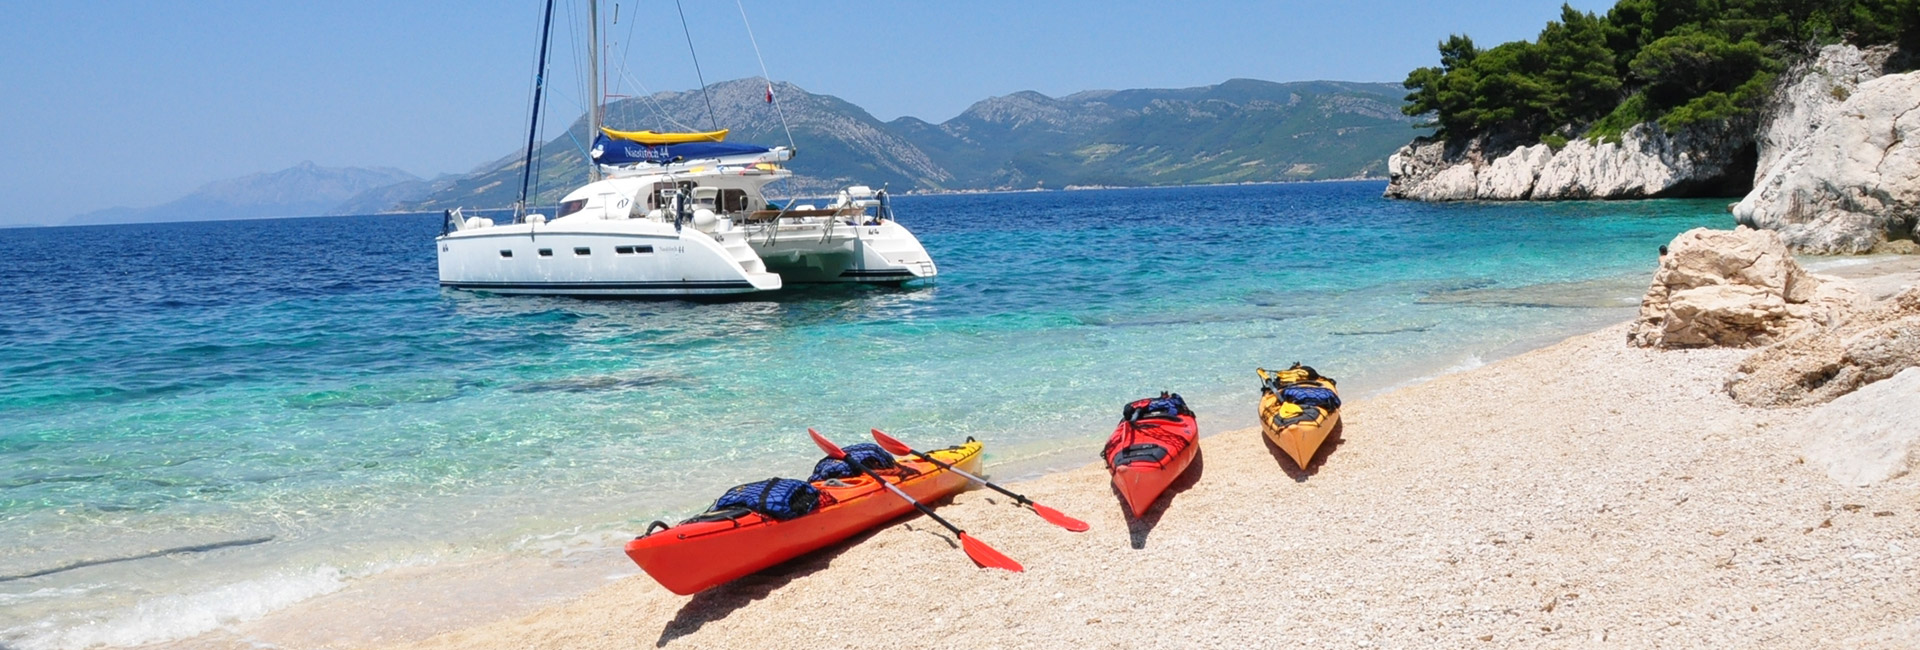 Dubrovnik Sailing Adventure in Croatia